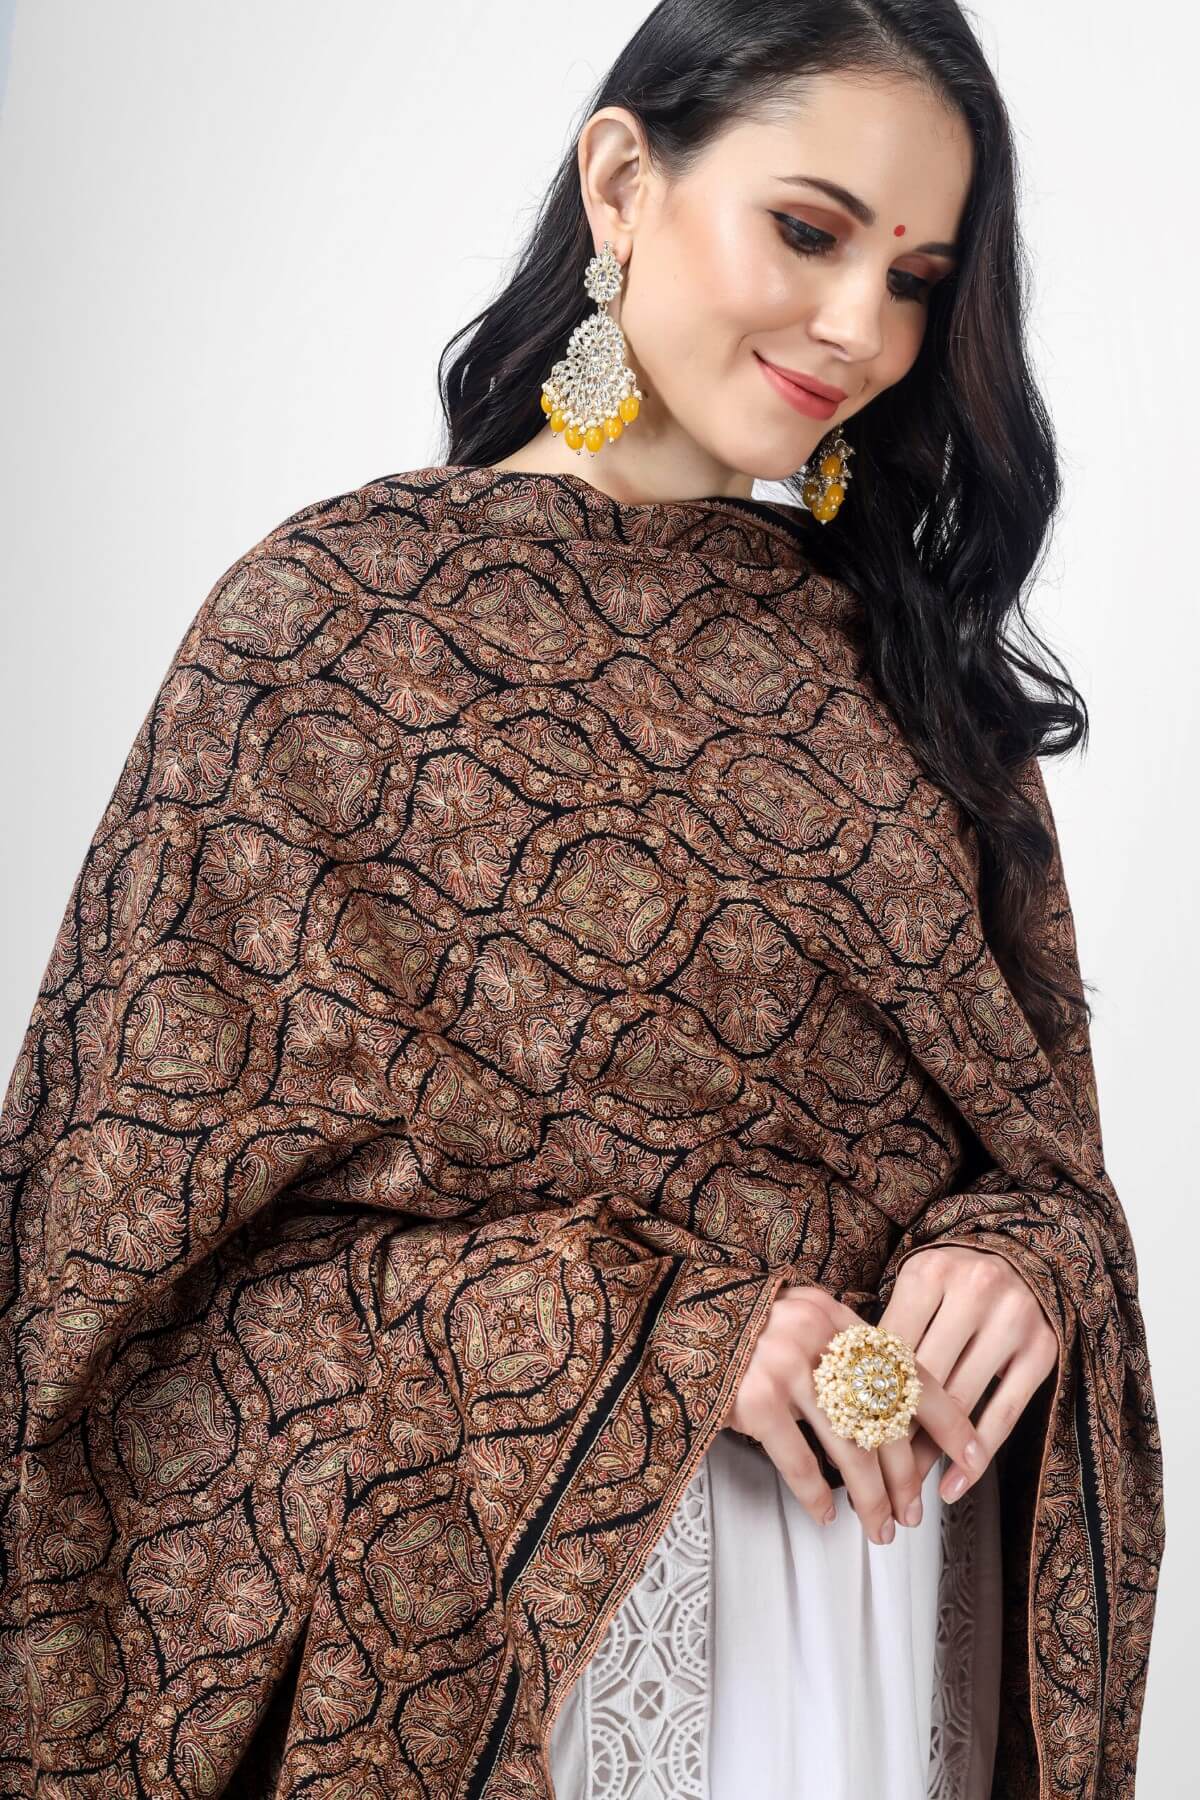 Global Elegance – Explore Genuine G.I. Pashmina Shawls in Delhi, Mumbai, Kolkata, Srinagar, USA, UK, Canada, Australia, France, Germany, Italy, Japan, Netherlands, and the UAE